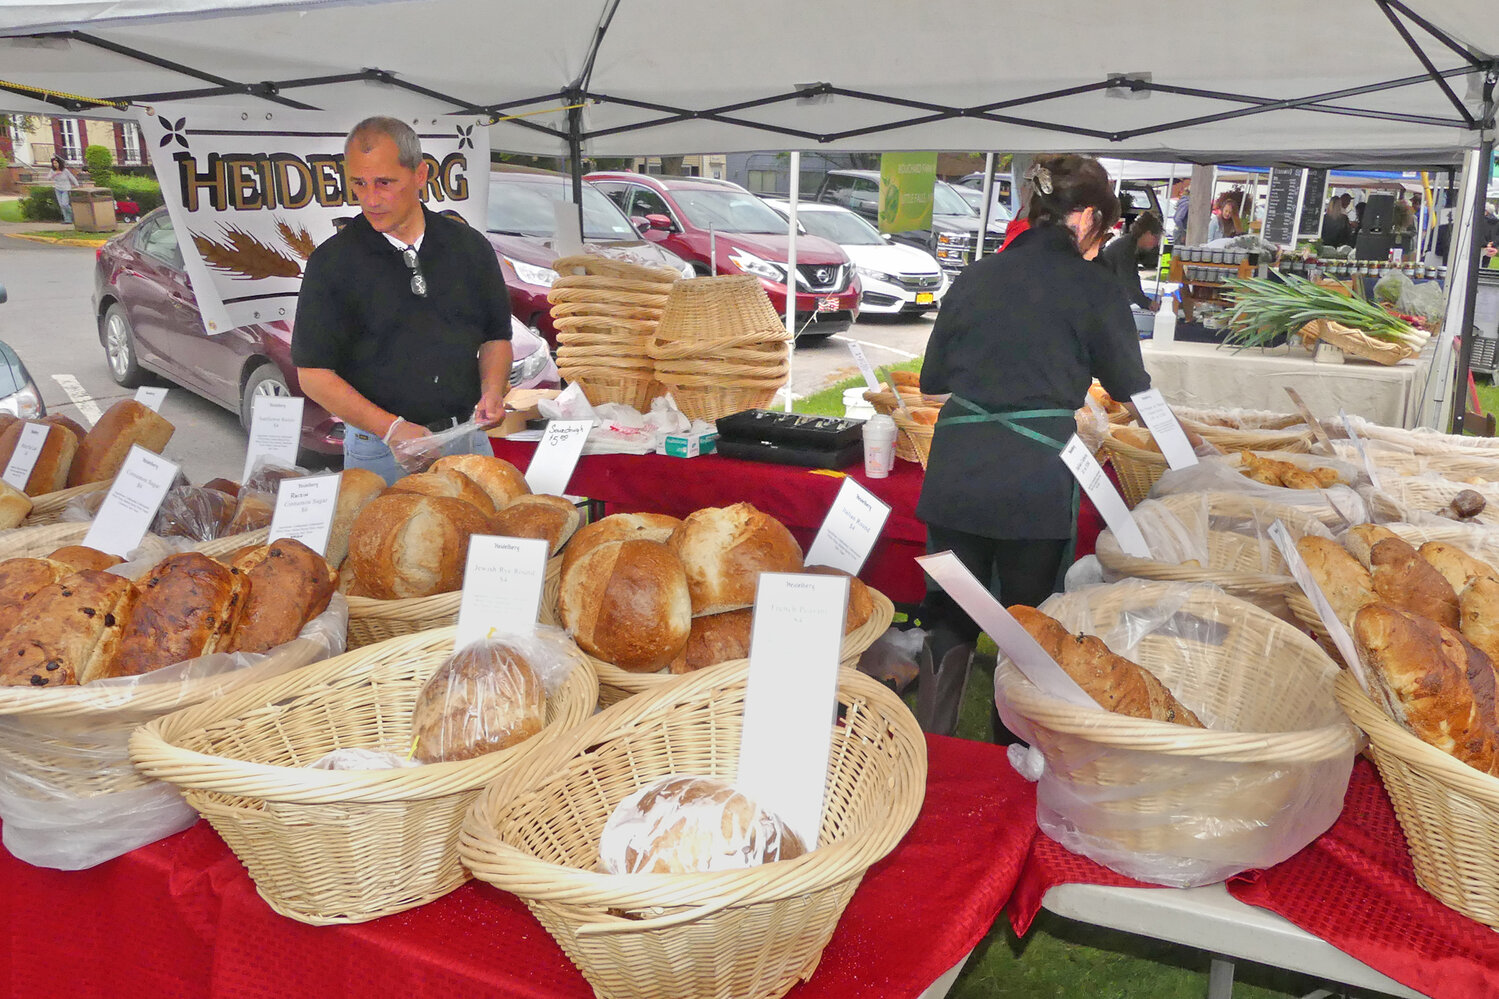 Teresa and David Bunces of Heidlberg Bread stock their bread baskets at Clinton Farmers Market.